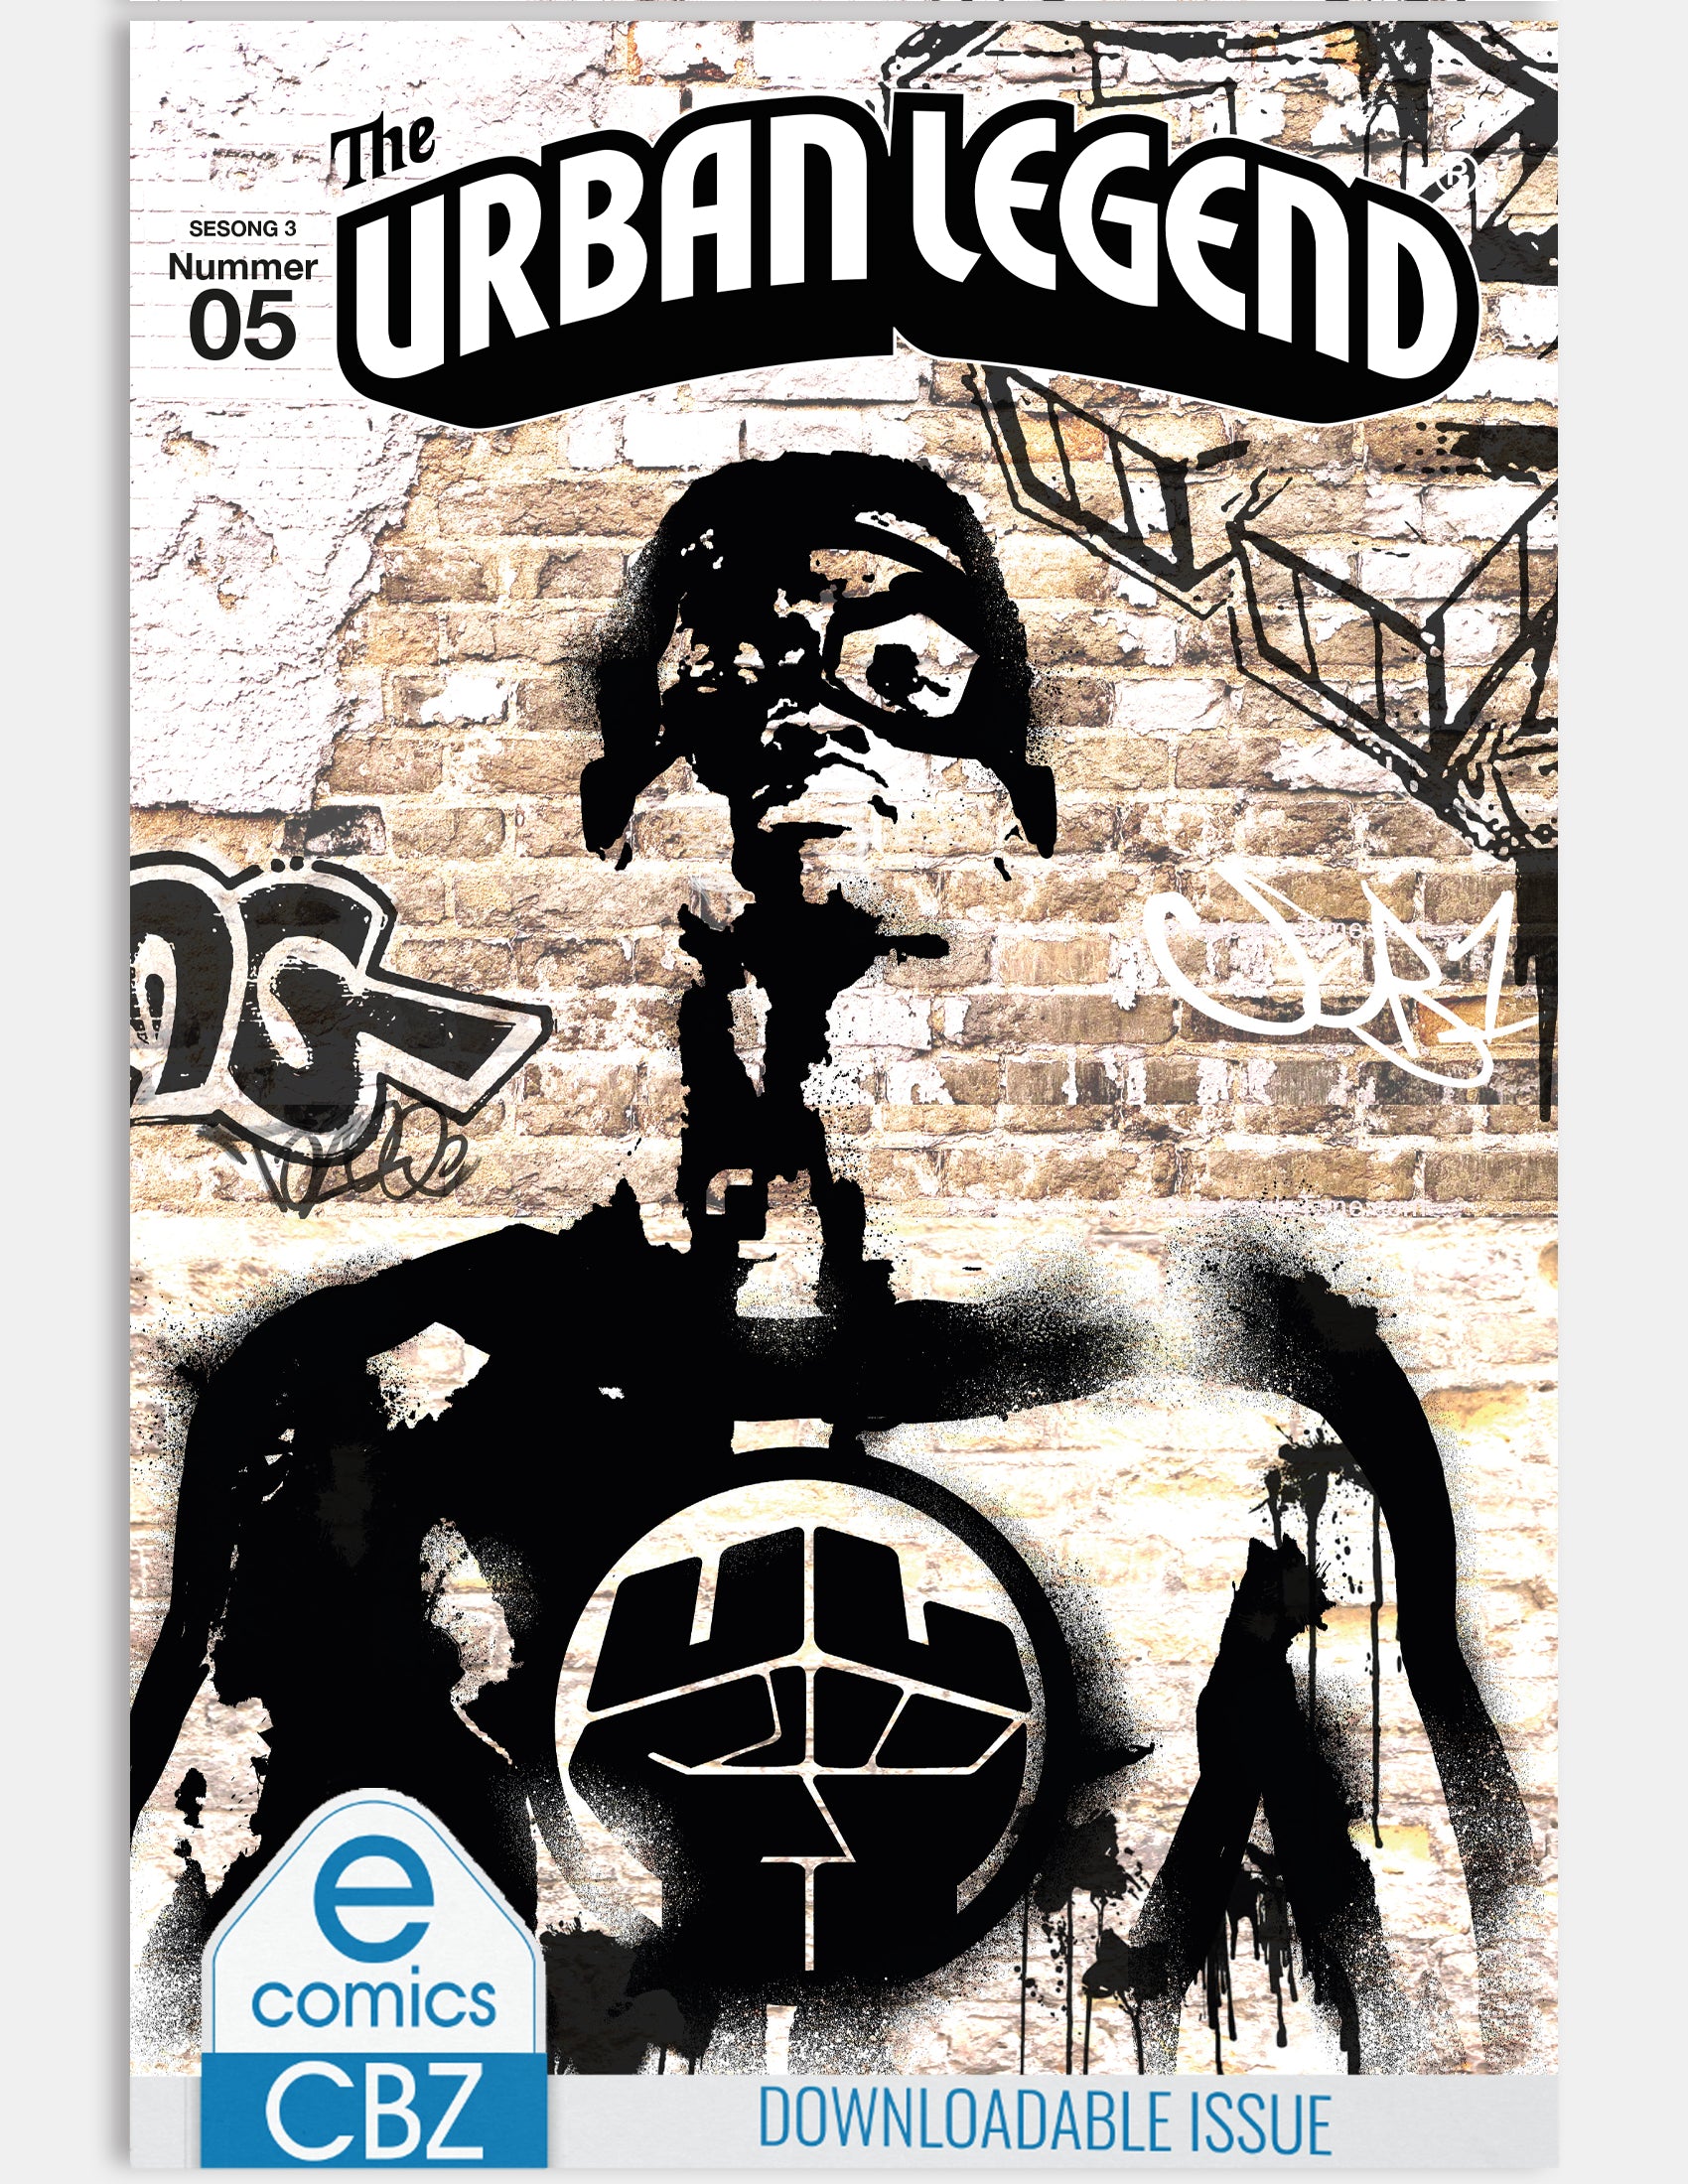 The Urban Legend - Stories (issue 5 - Season 3) - Digital Issue